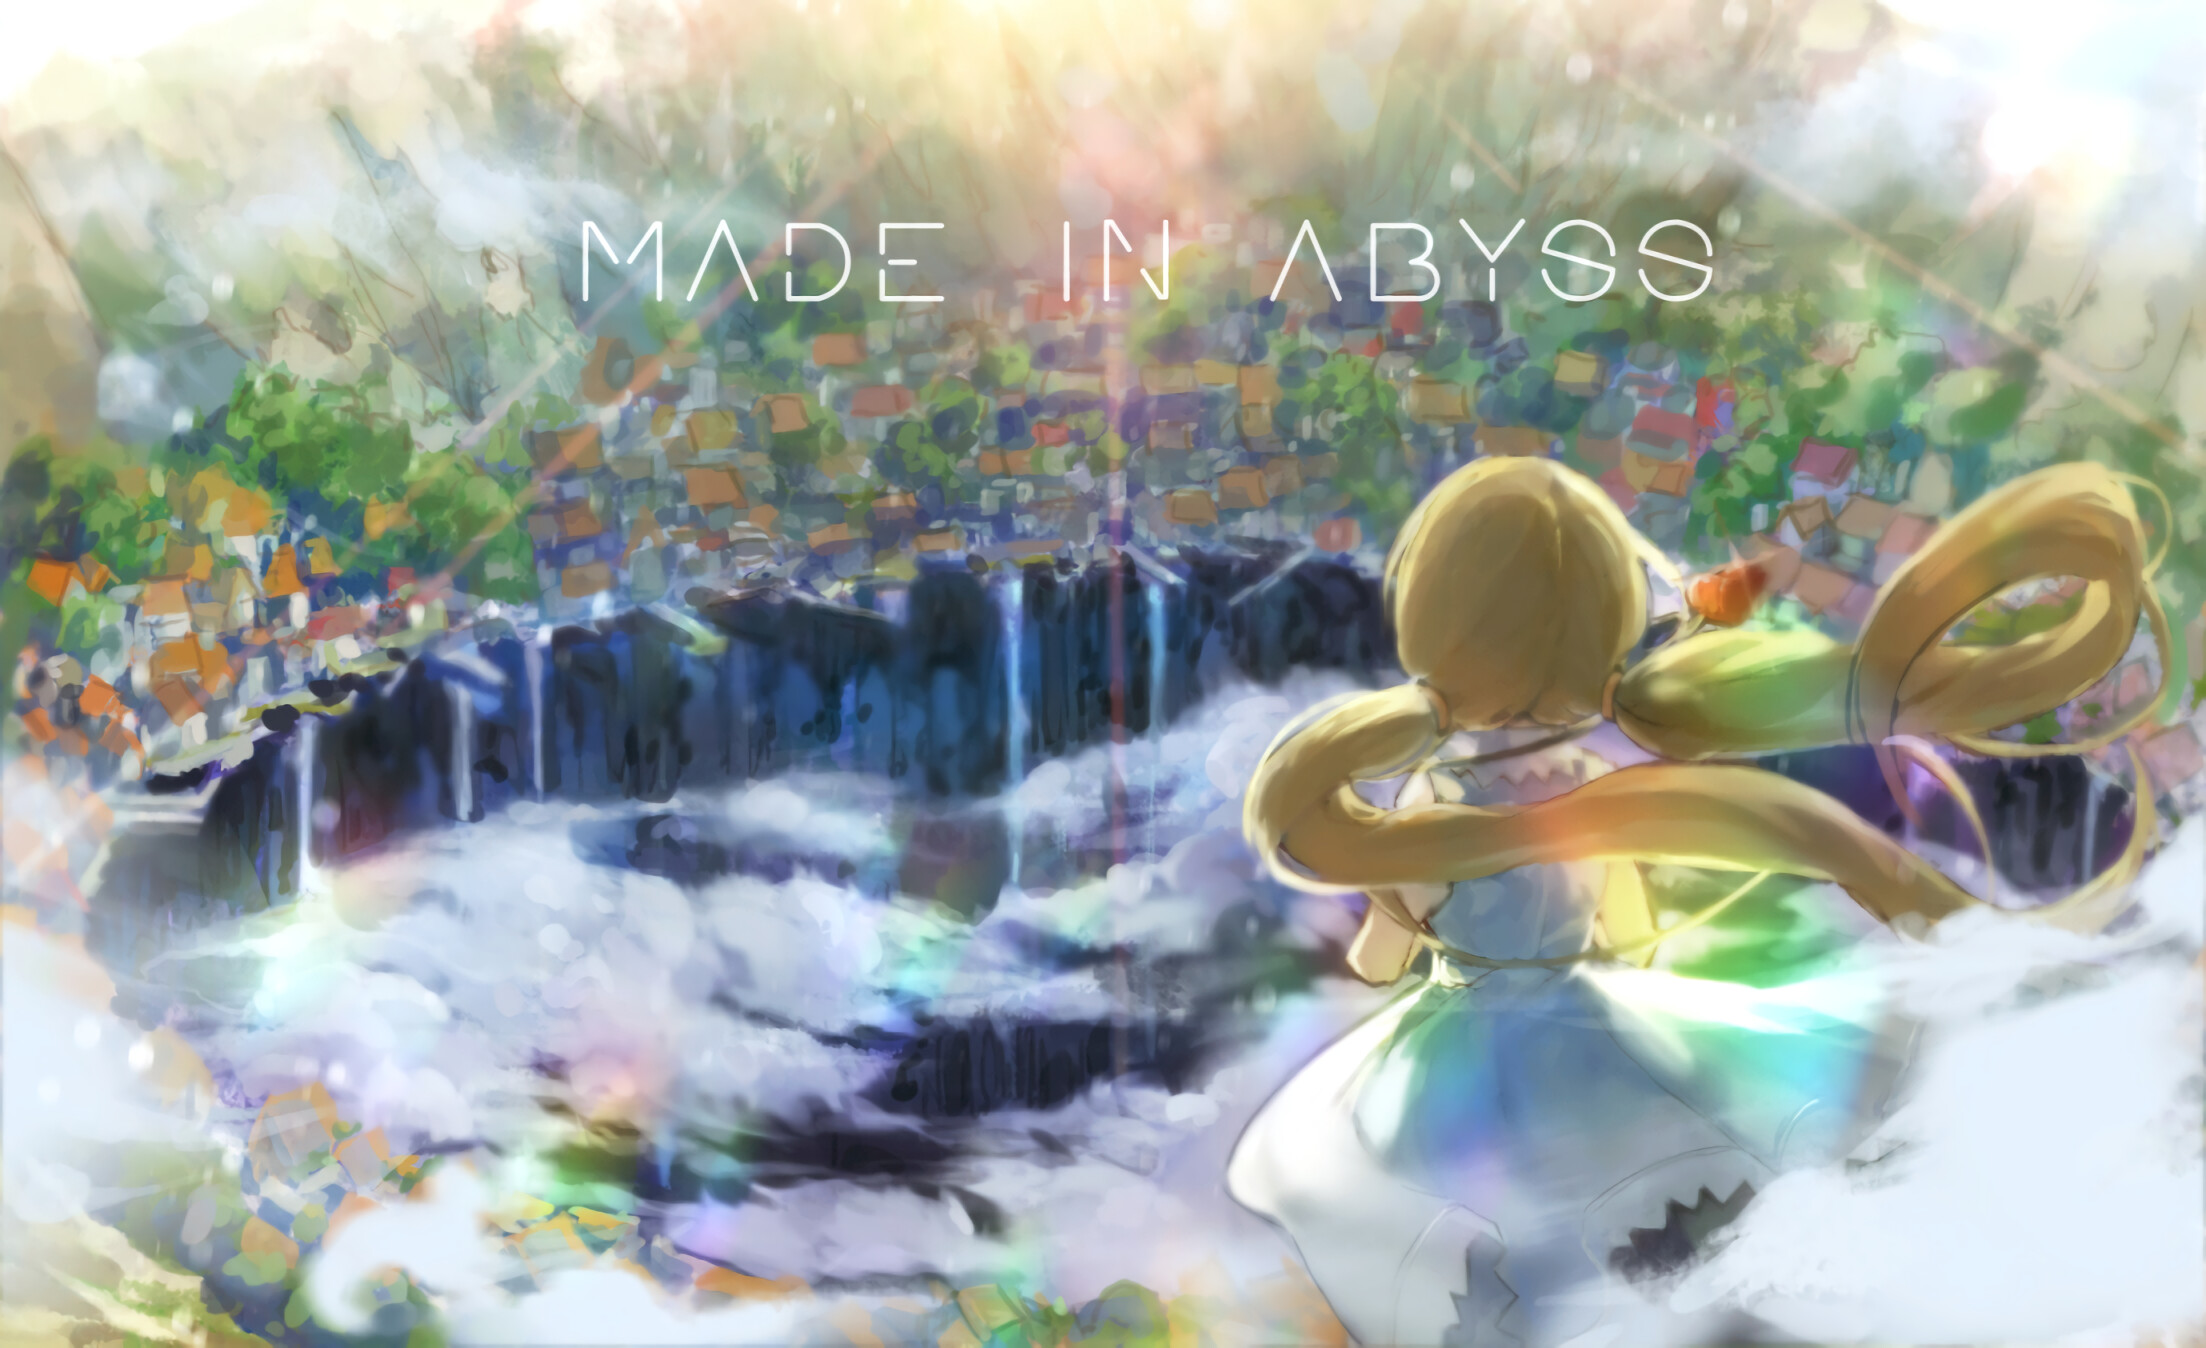 Made in Abyss (TV Series): Mariya Ise performed the ending theme "Tabi no Hidarite, Saihate no Migite". 2210x1350 HD Background.